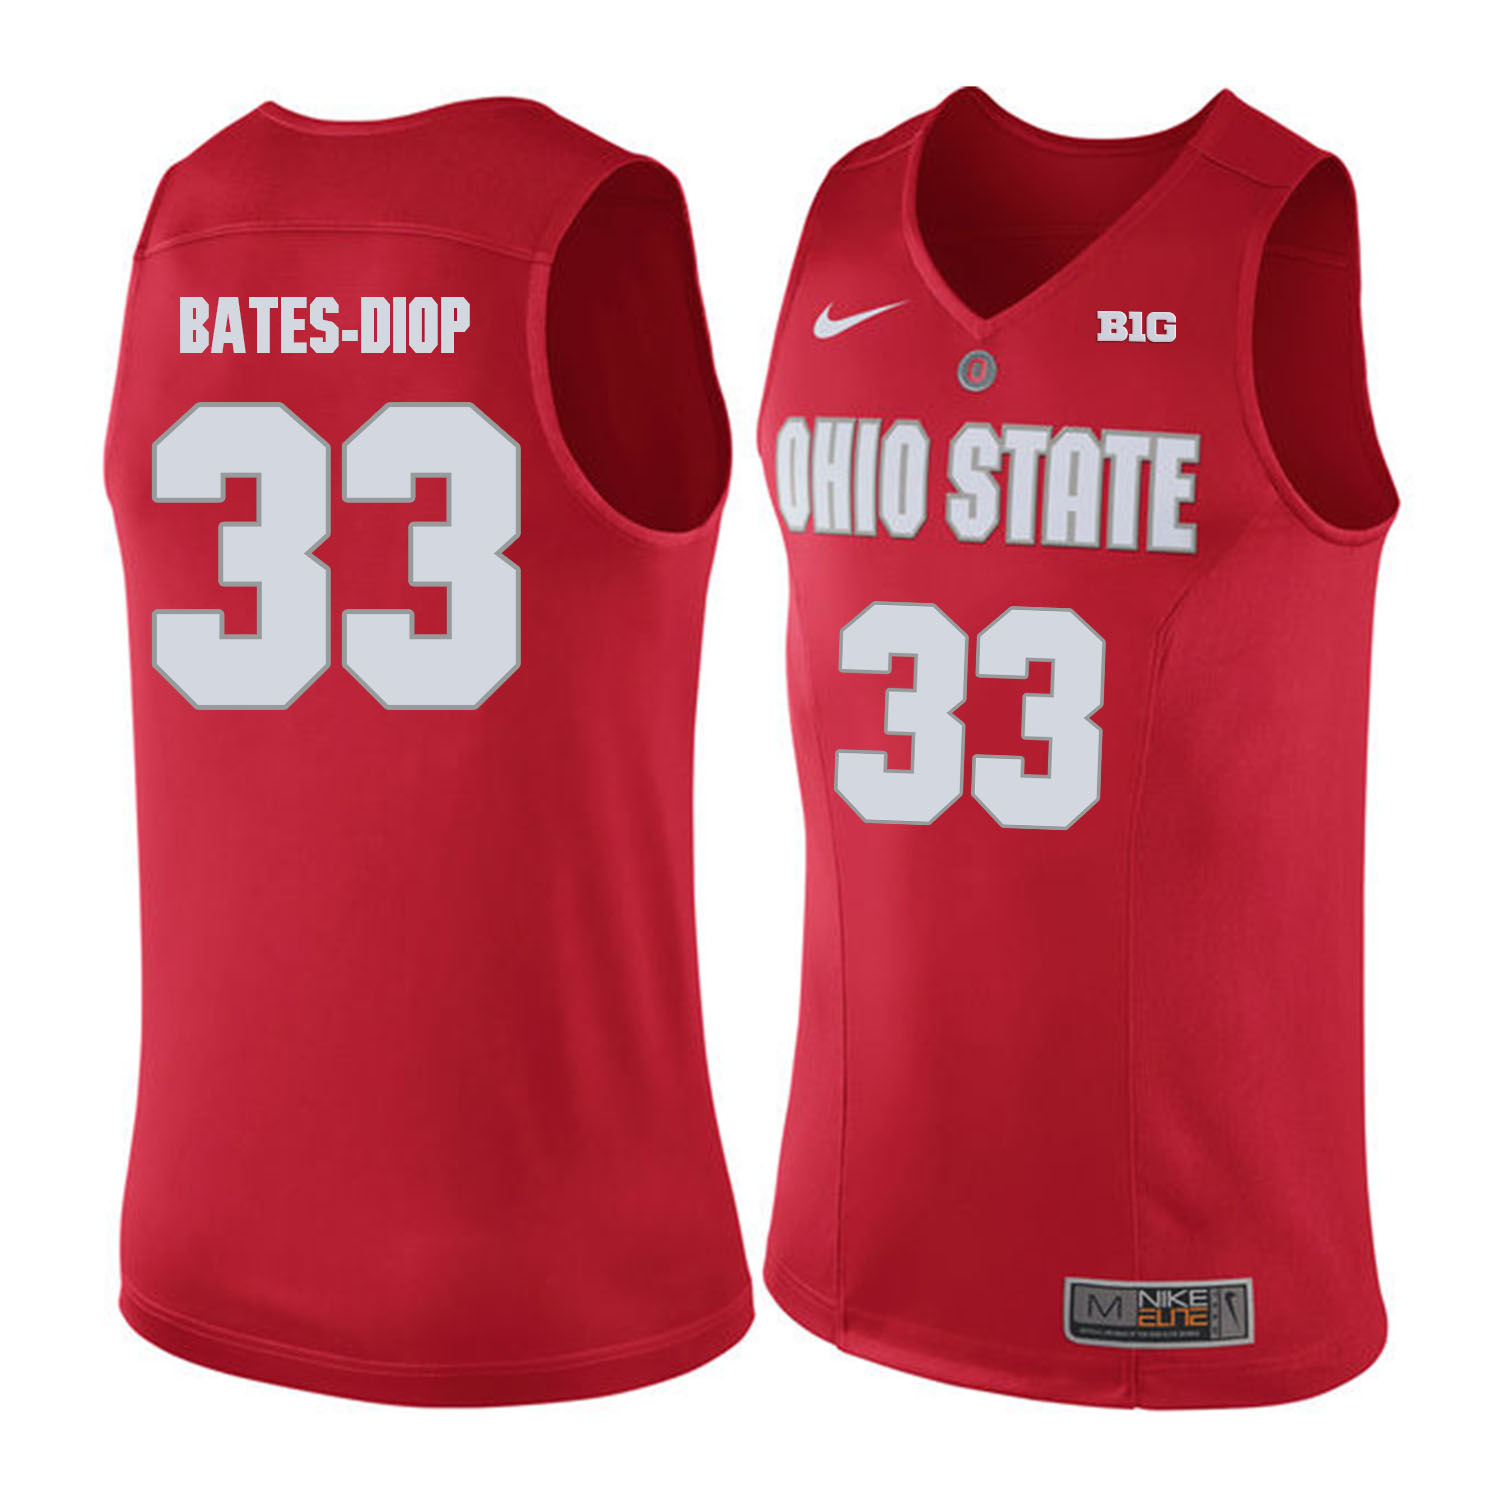 Ohio State Buckeyes 33 Keita Bates-Diop Red College Basketball Jersey